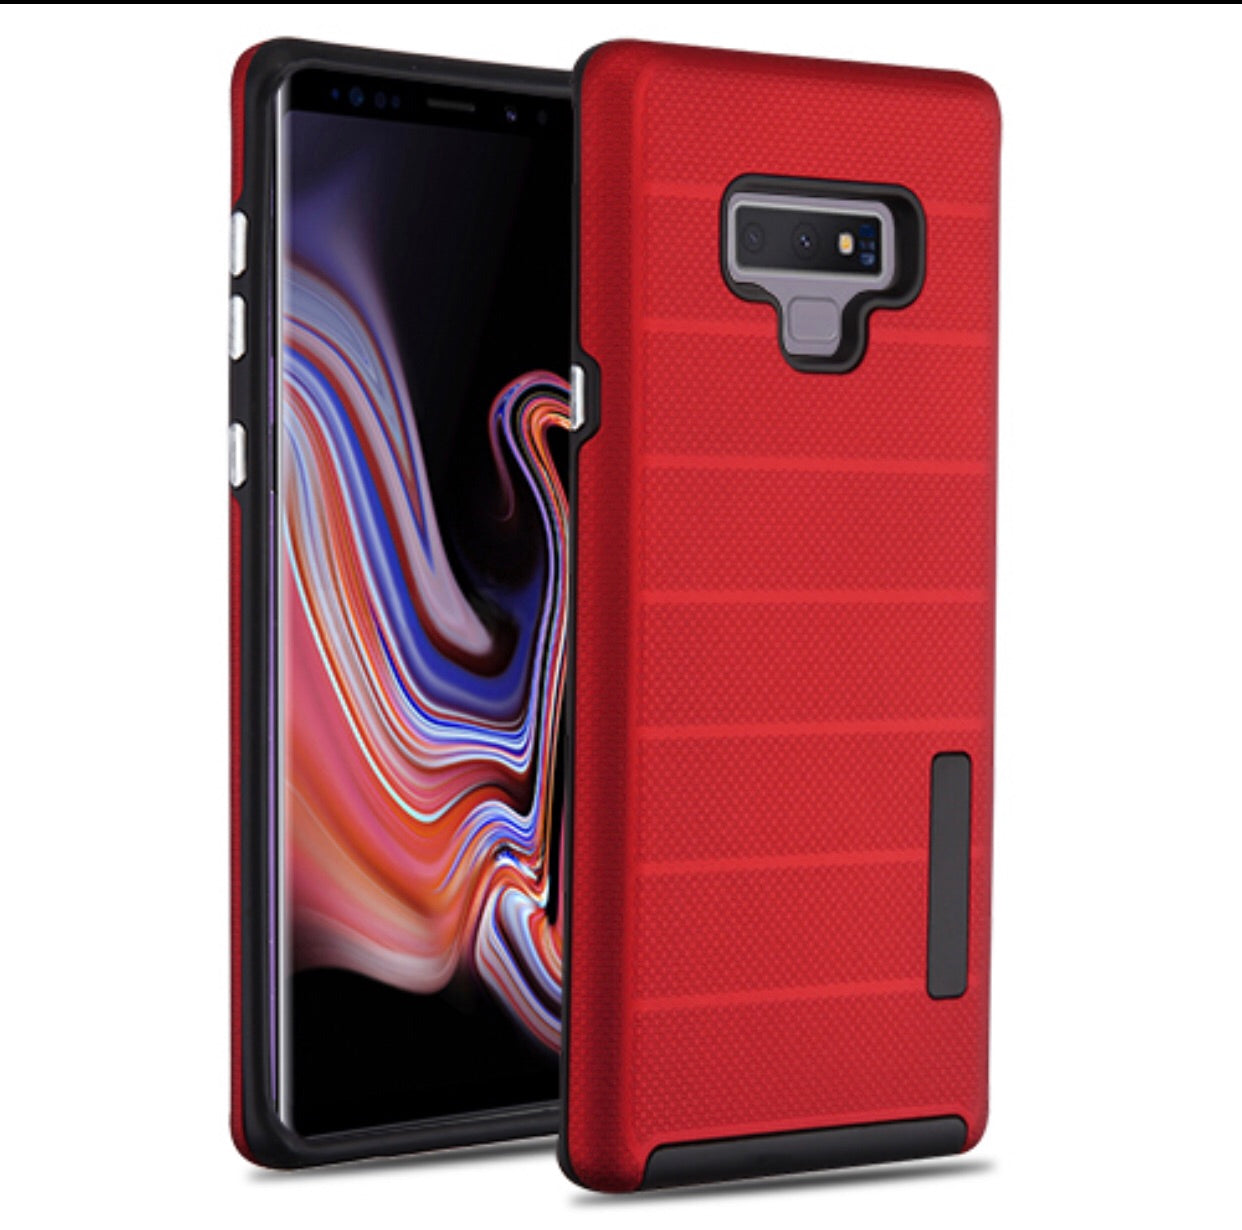 Samsung Galaxy Note 9 Hybrid Case- Red/Black